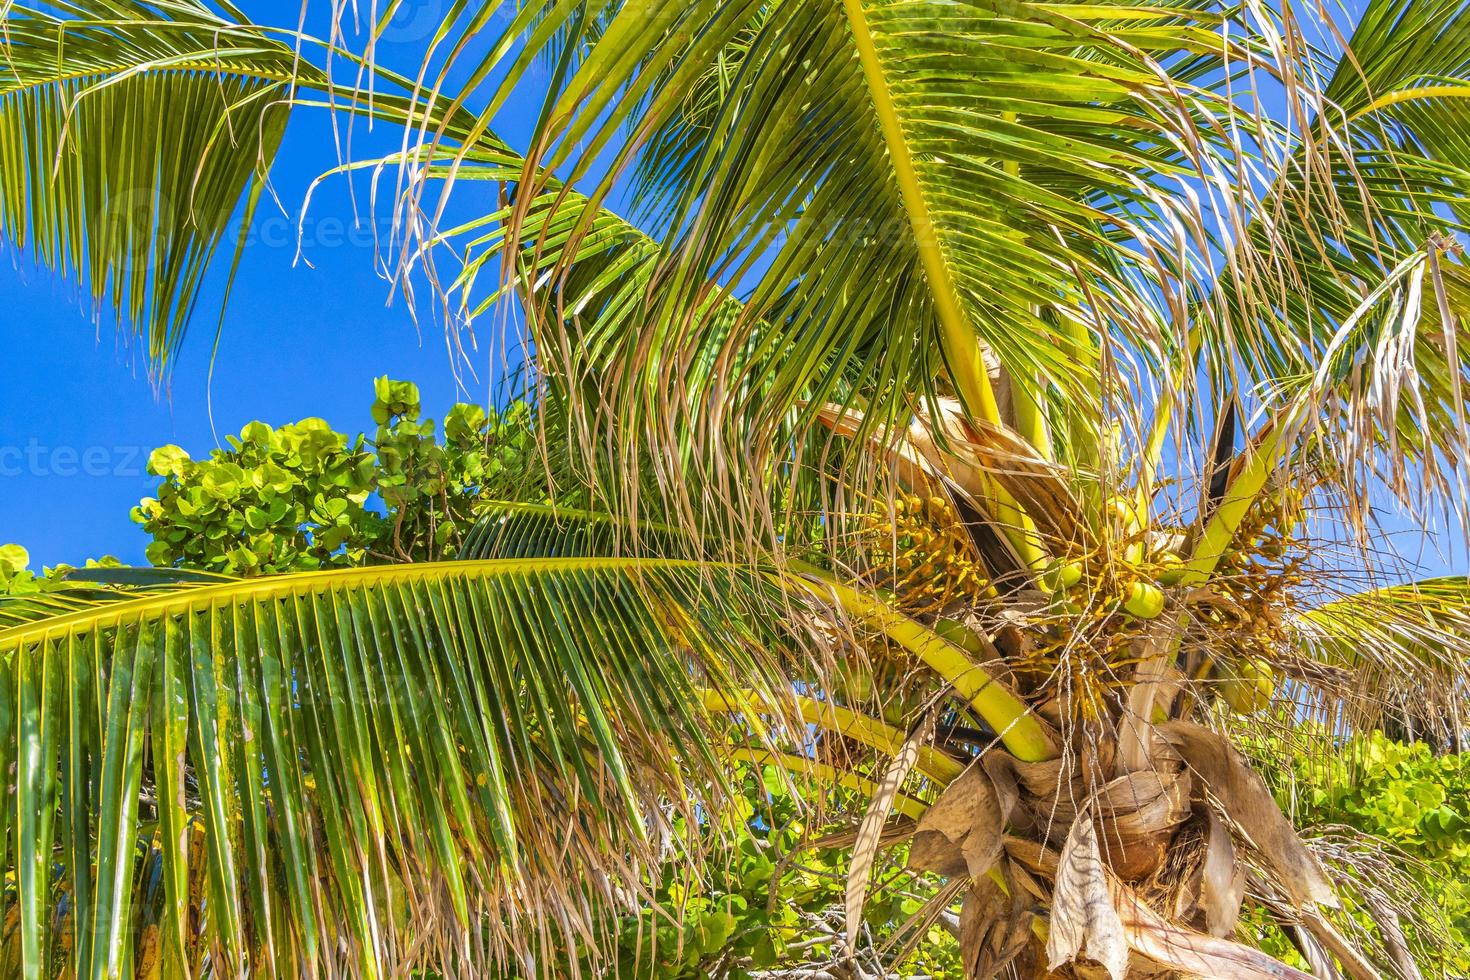 tropisk palm med blå himmel playa del carmen mexico. foto